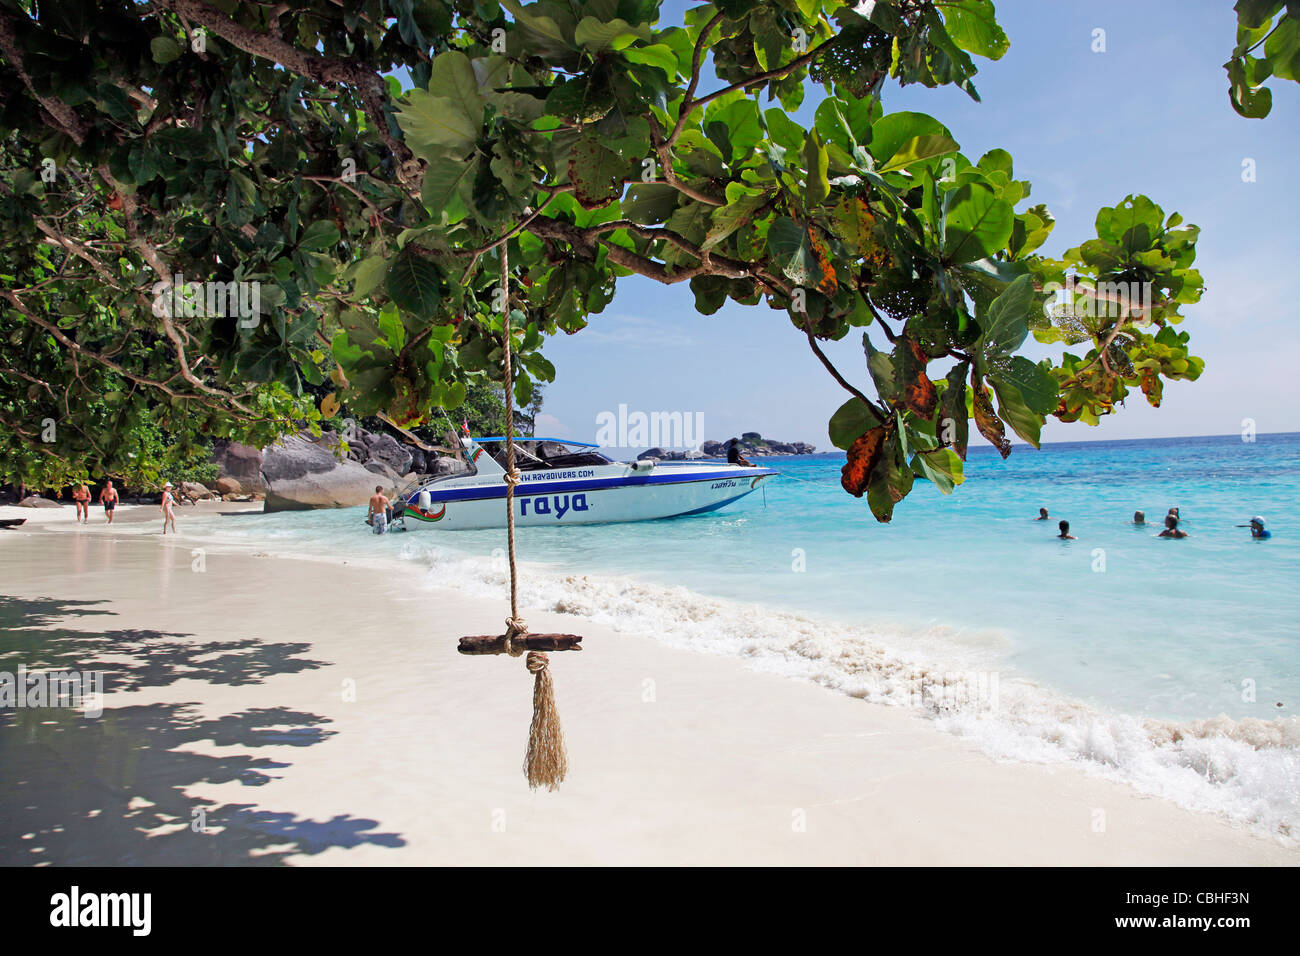 Spiaggia sabbiosa tropicale scena con alberi e rocce di Miang isola, isole Similan, Phang-Nga, vicino a Phuket, Tailandia Foto Stock